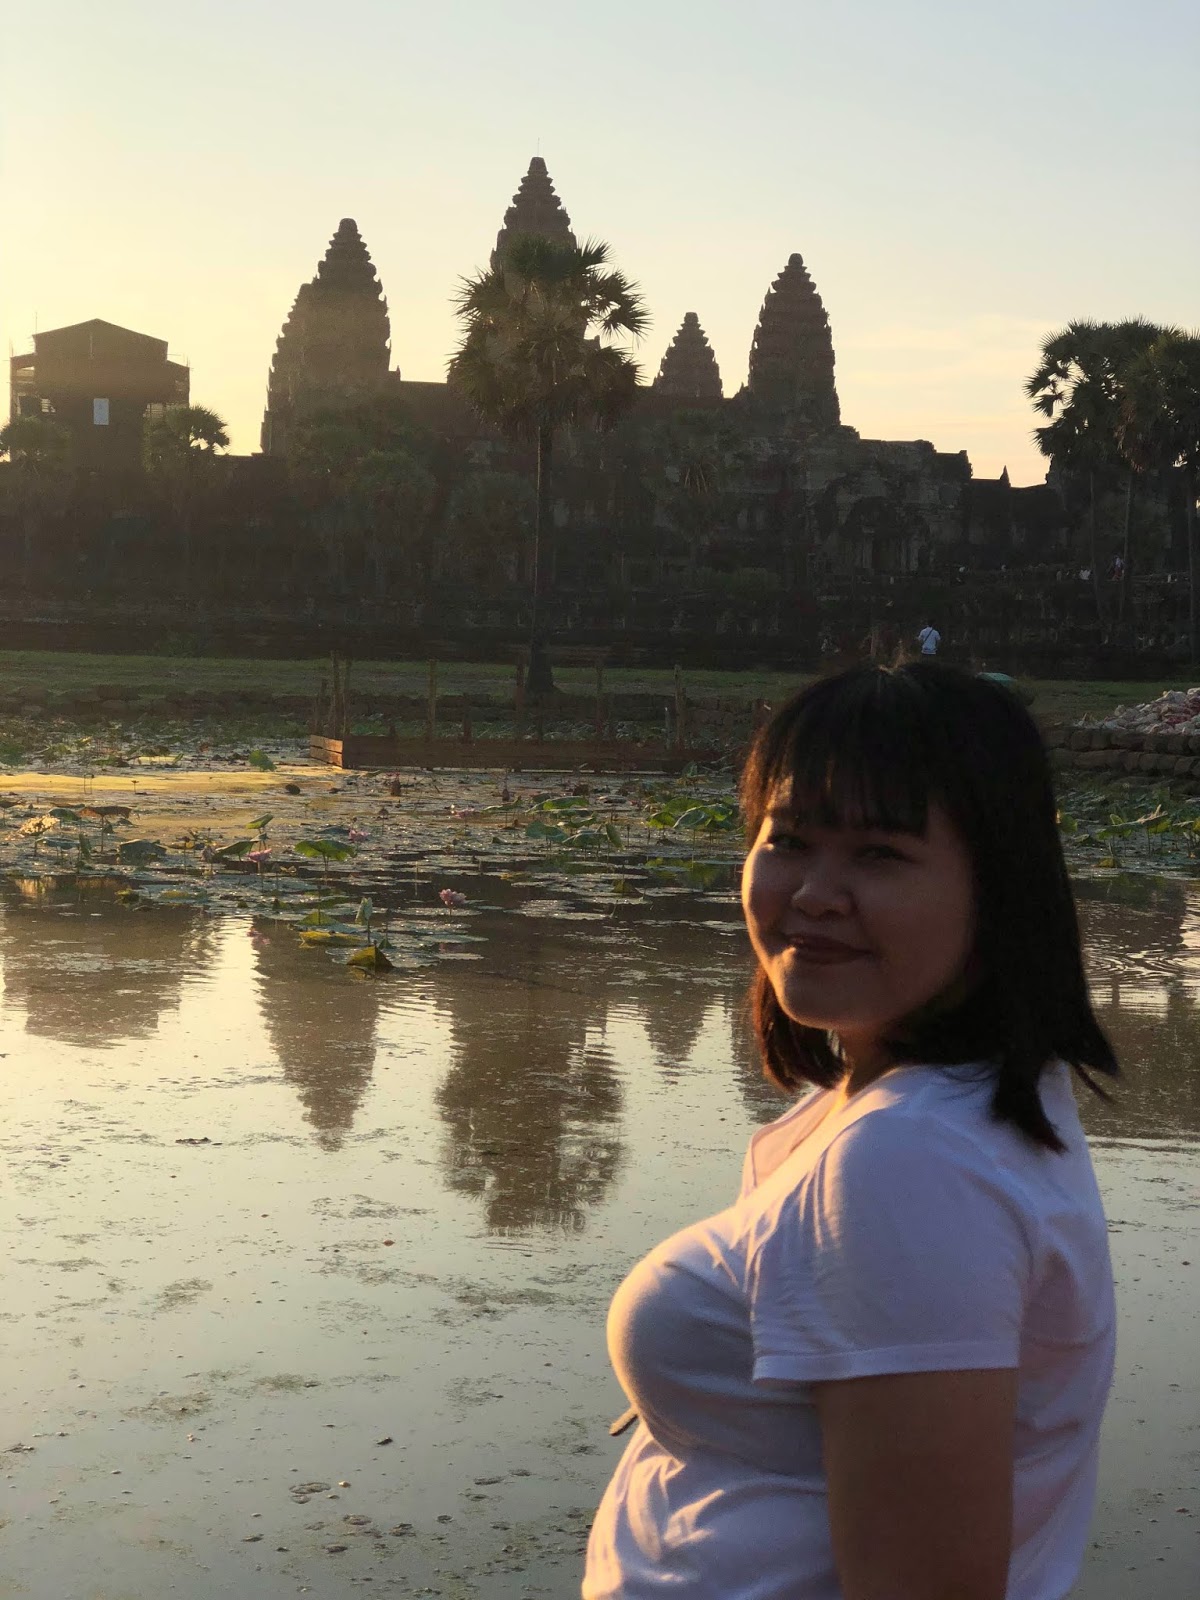 Ton having her turista shot in front of Angkor Wat